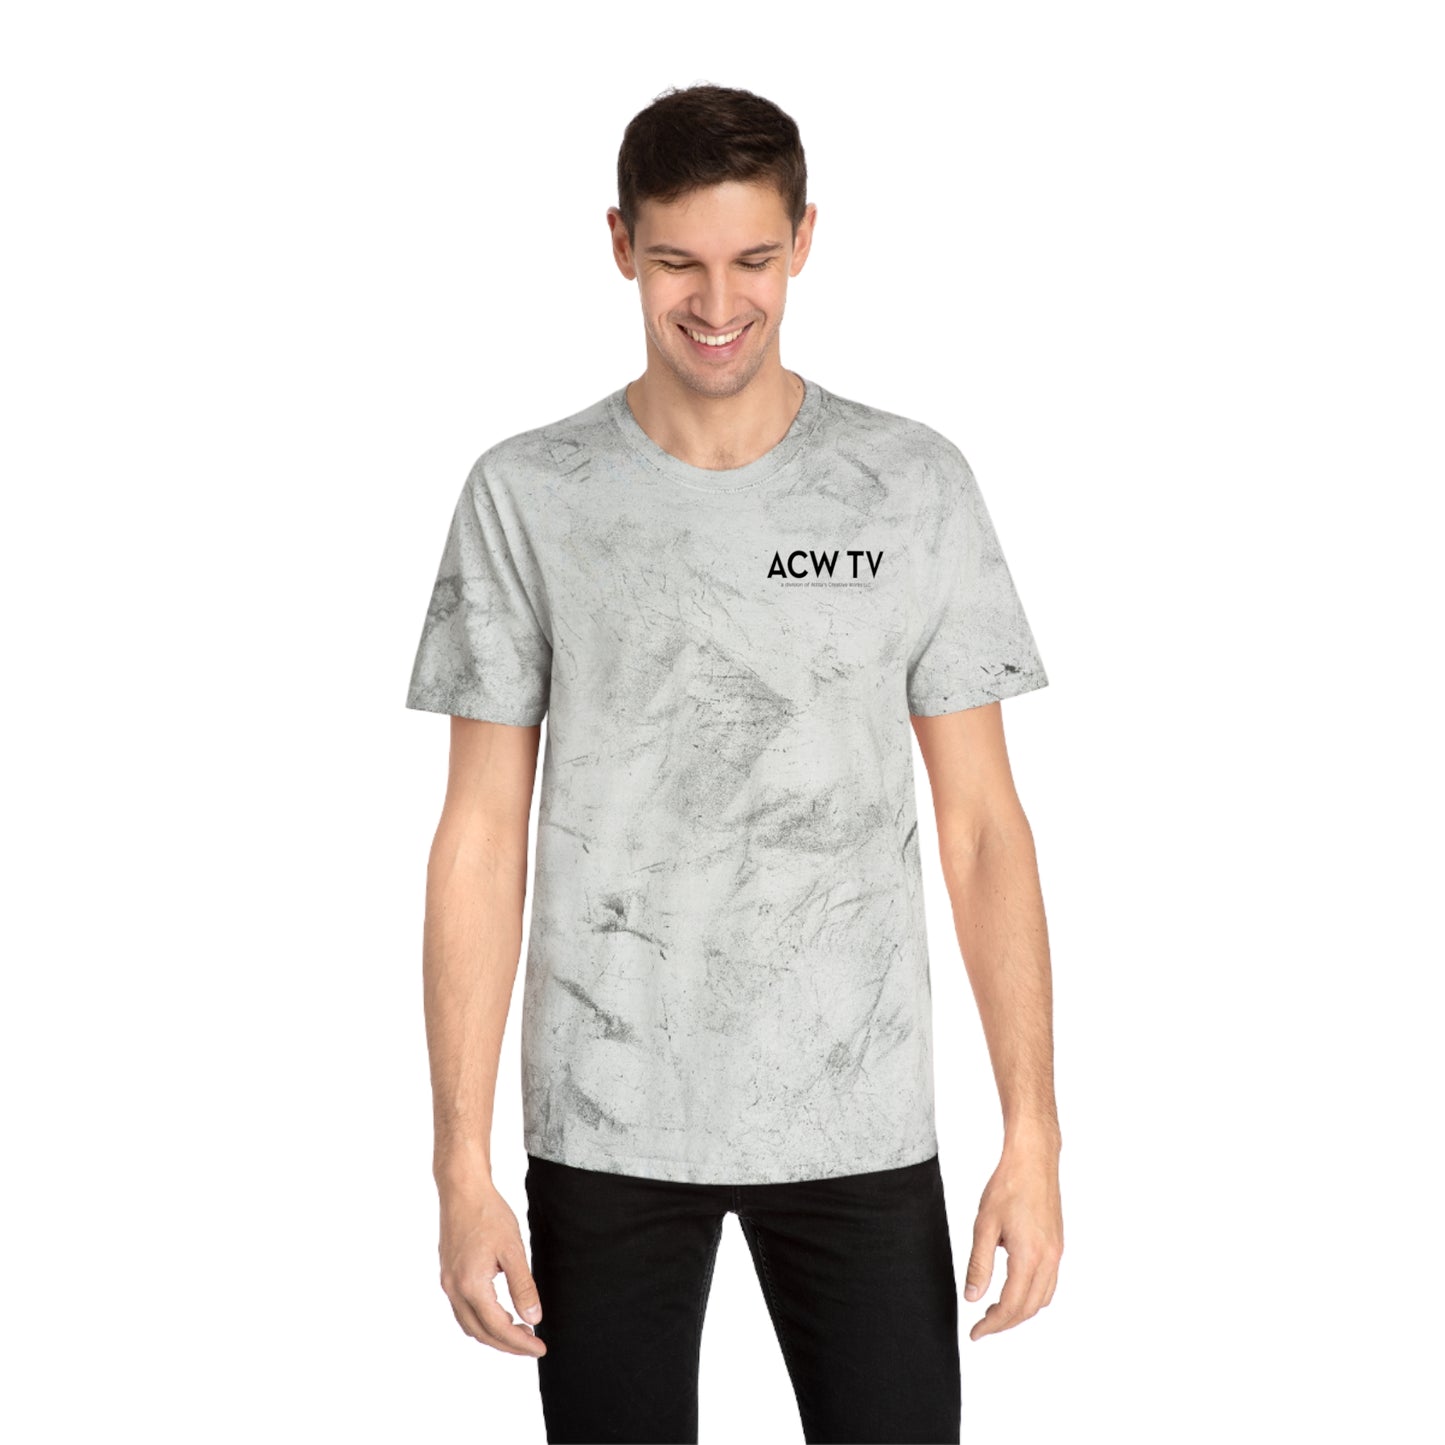 ACWTV - Unisex Color Blast T-Shirt